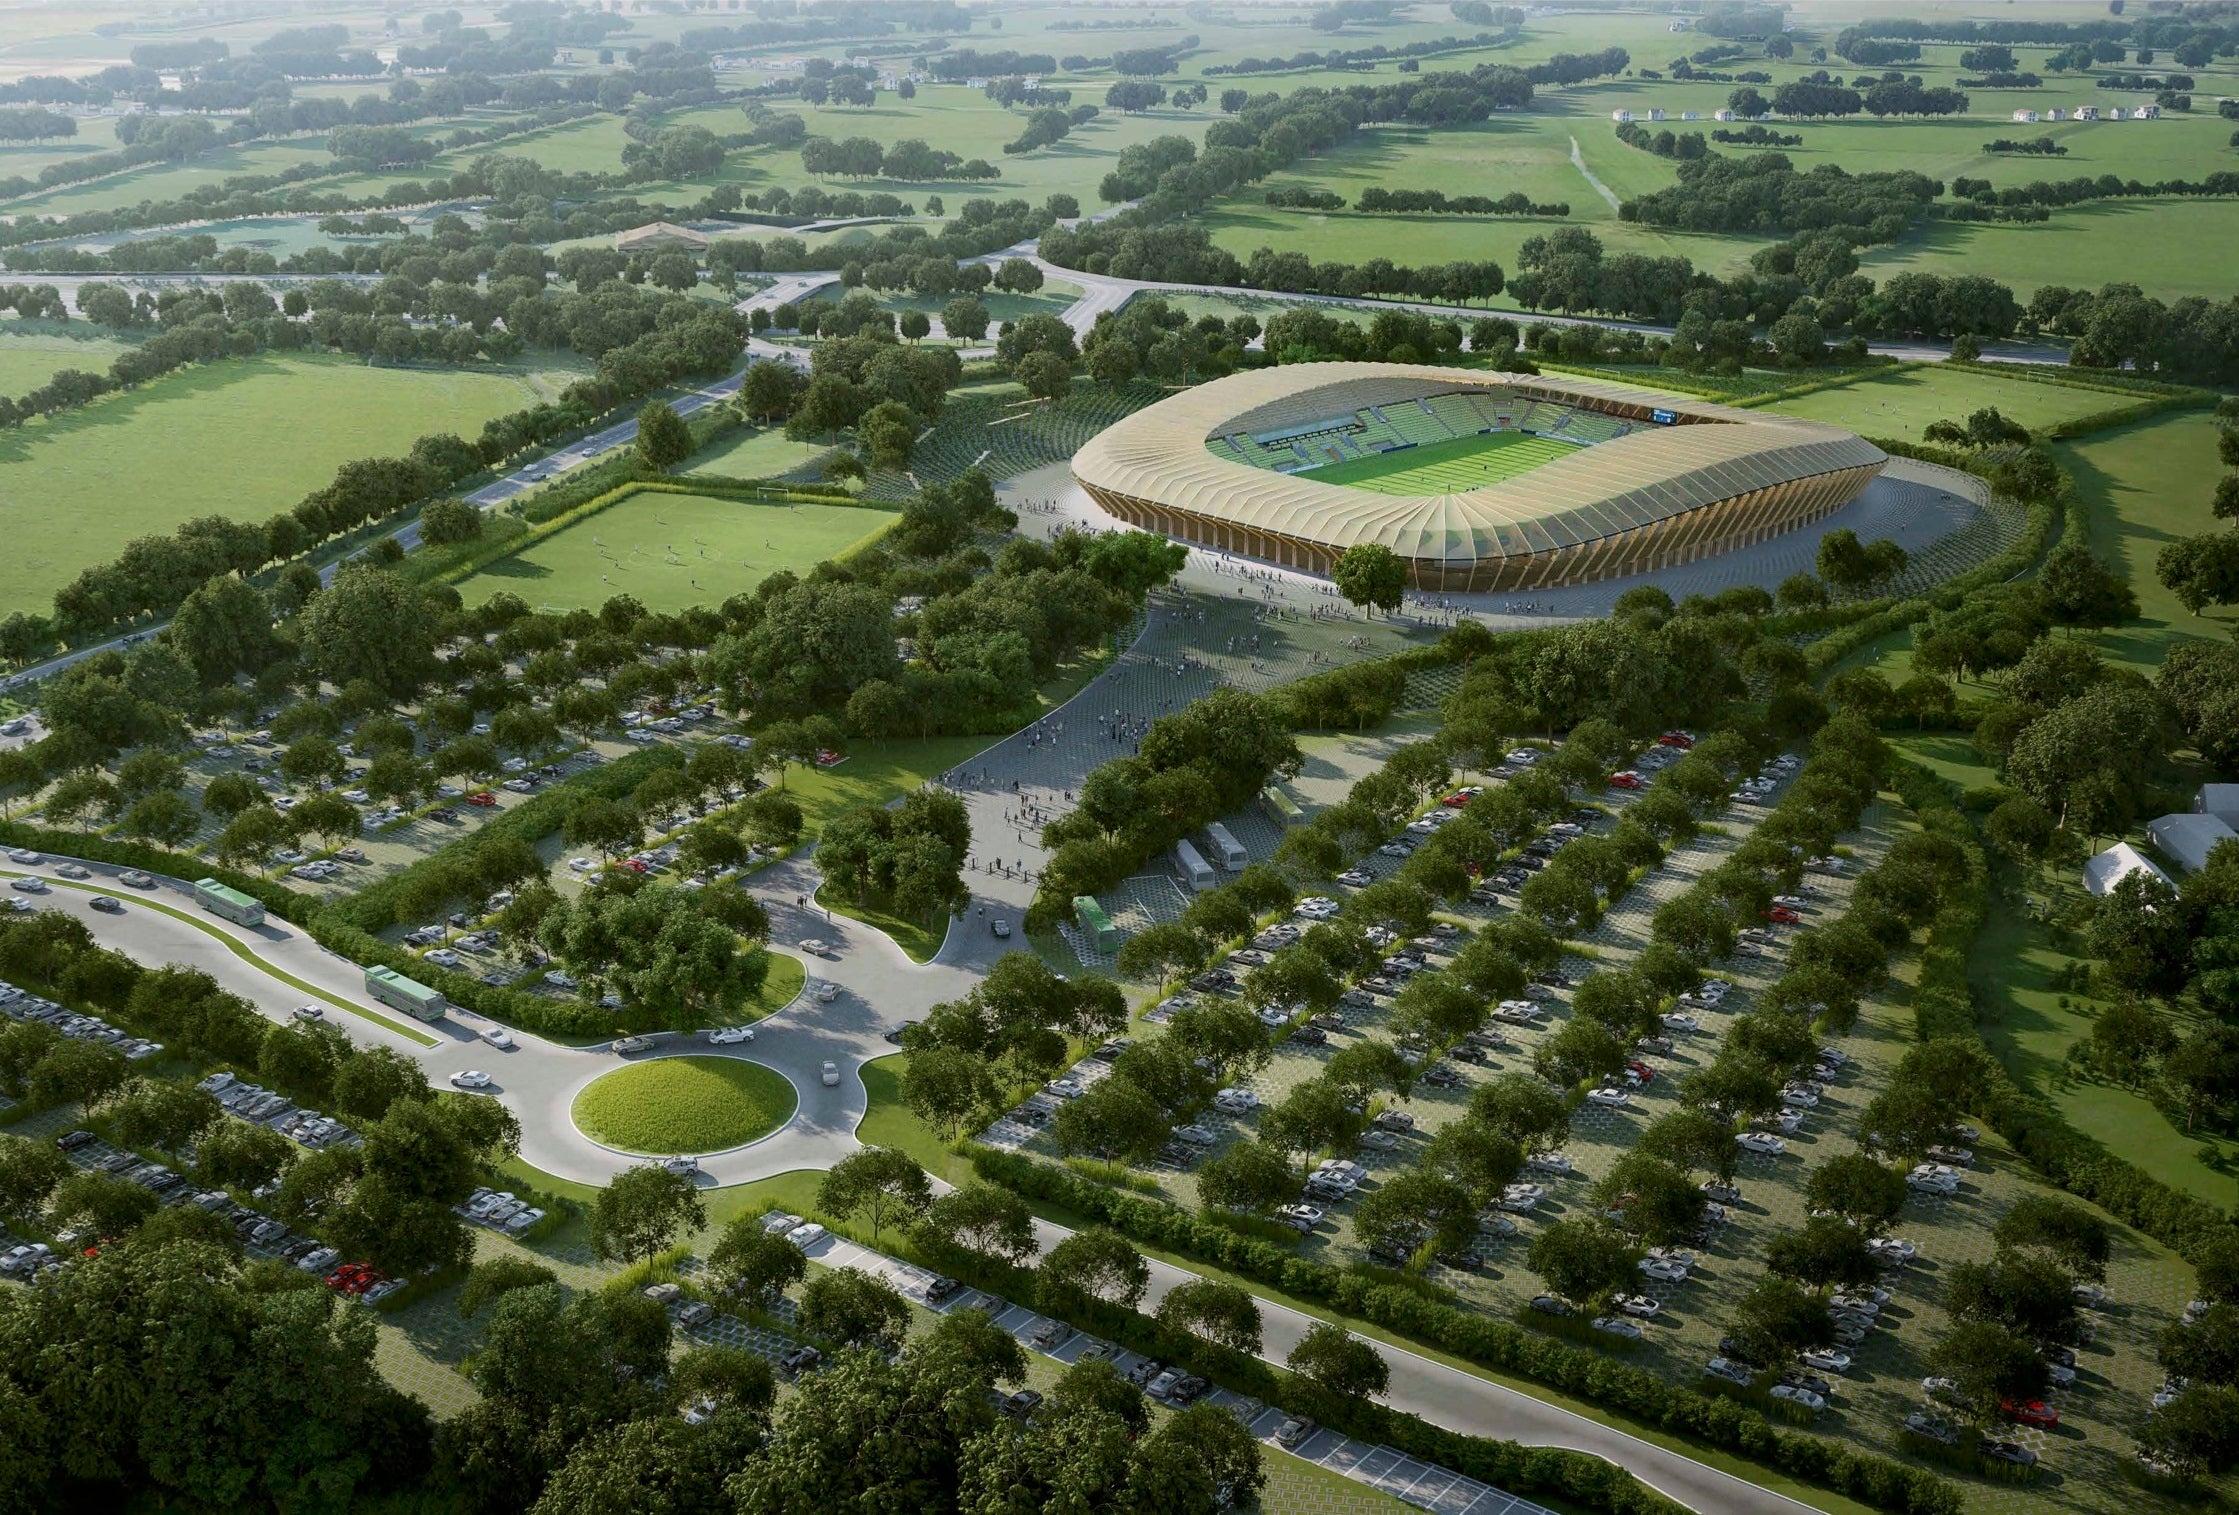 Artist’s impression of the proposed new stadium (Zaha Hadid Architects)